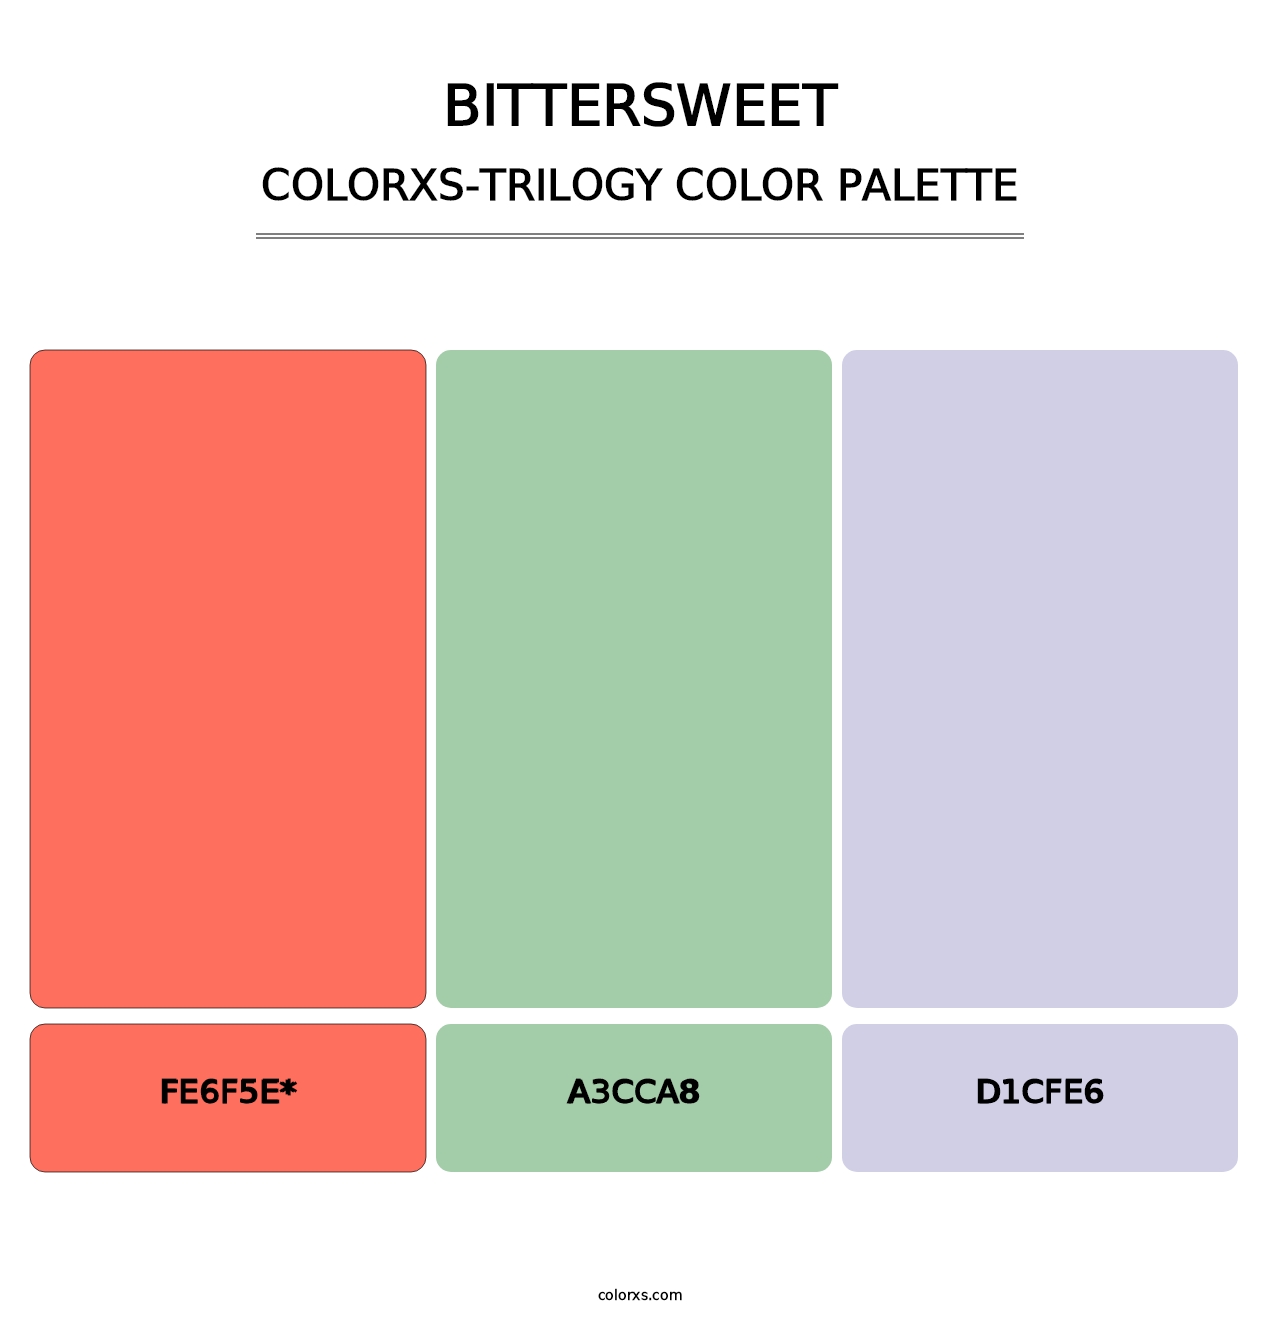 Bittersweet - Colorxs Trilogy Palette